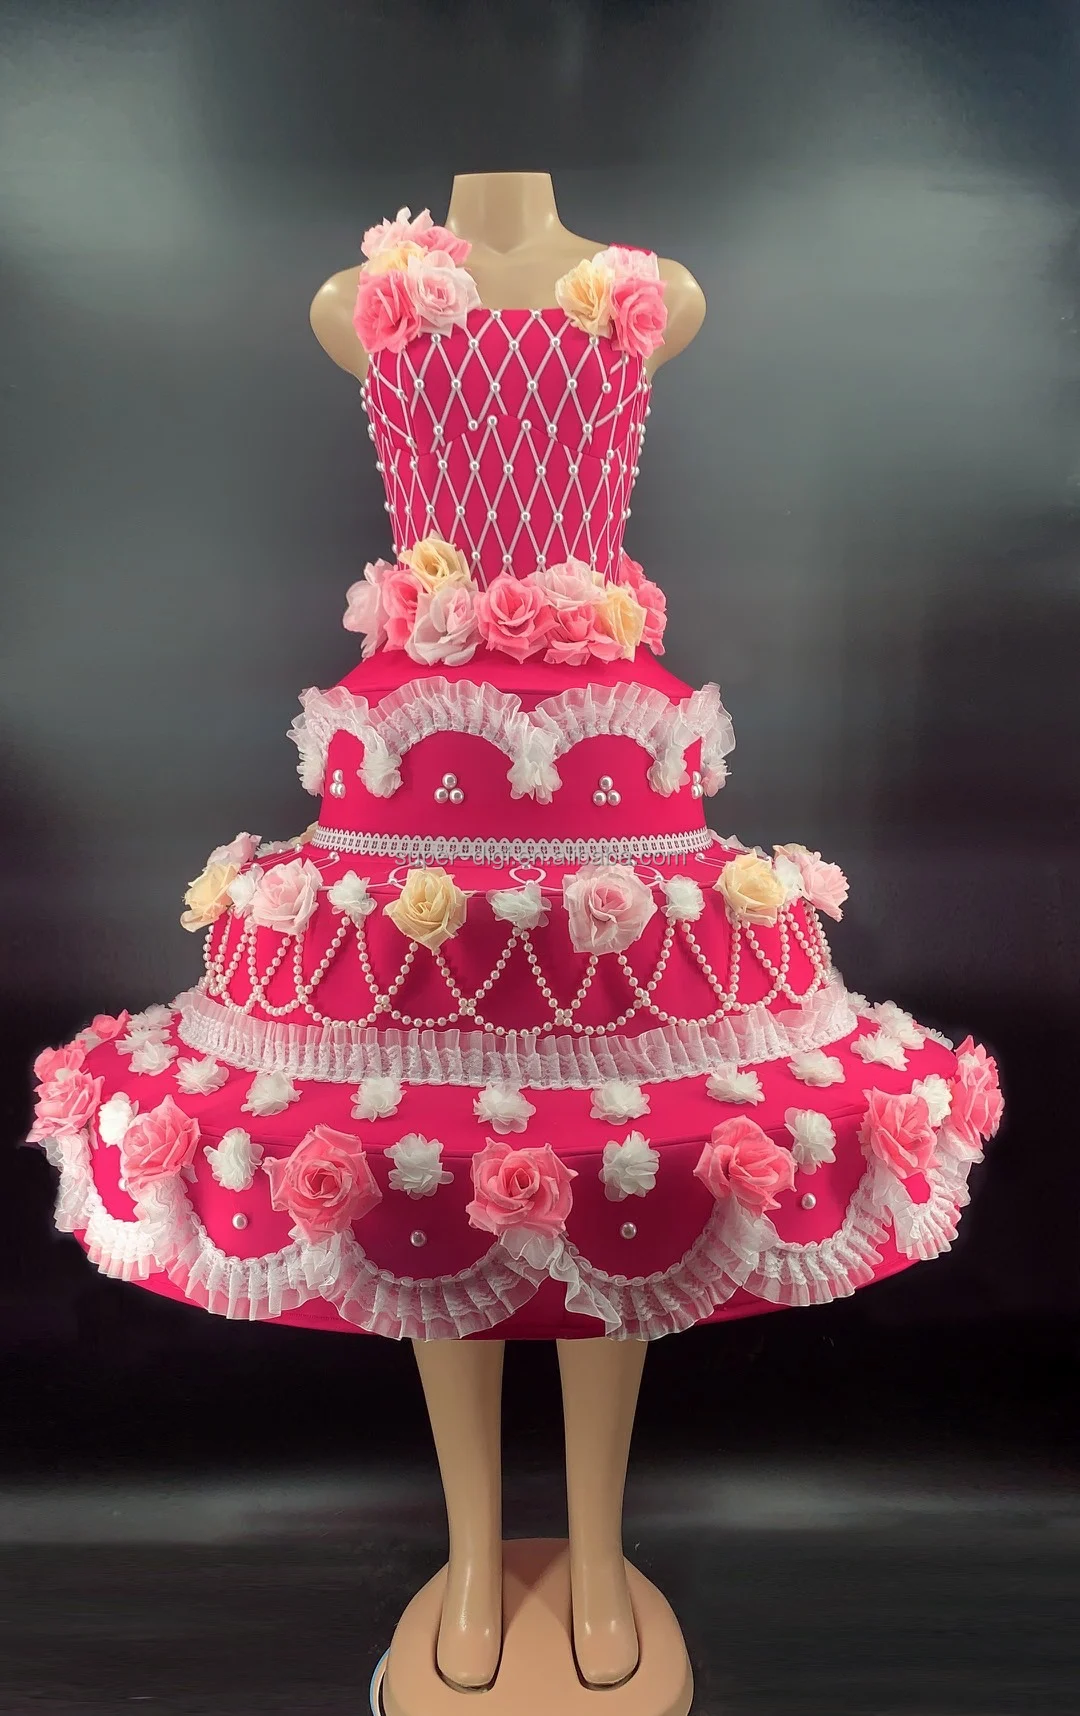 Dress design birthday cake |Frock design cake | Girls cake design - YouTube